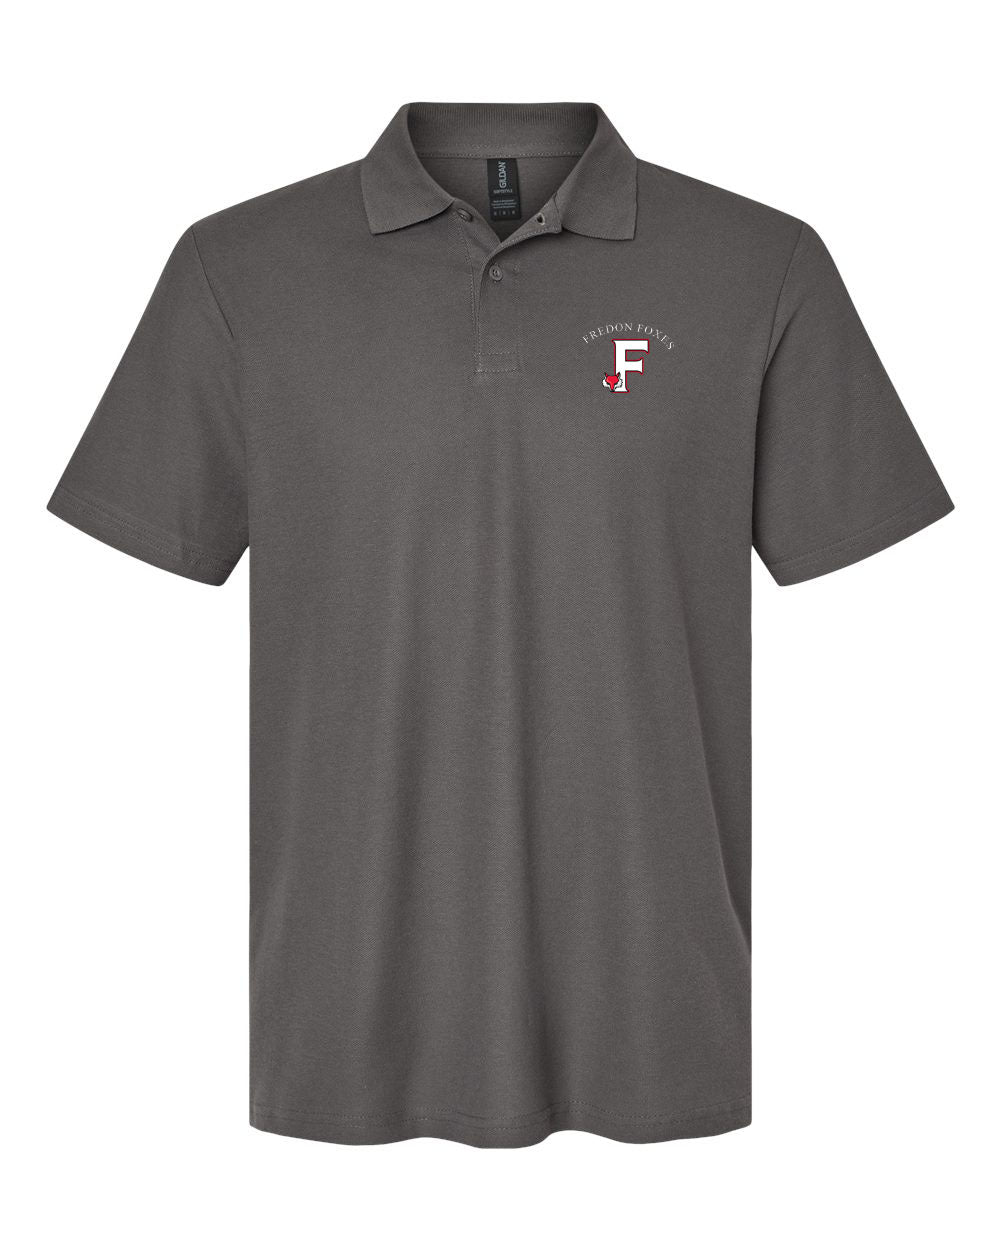 Fredon Design 9 Performance Material Polo T-Shirt